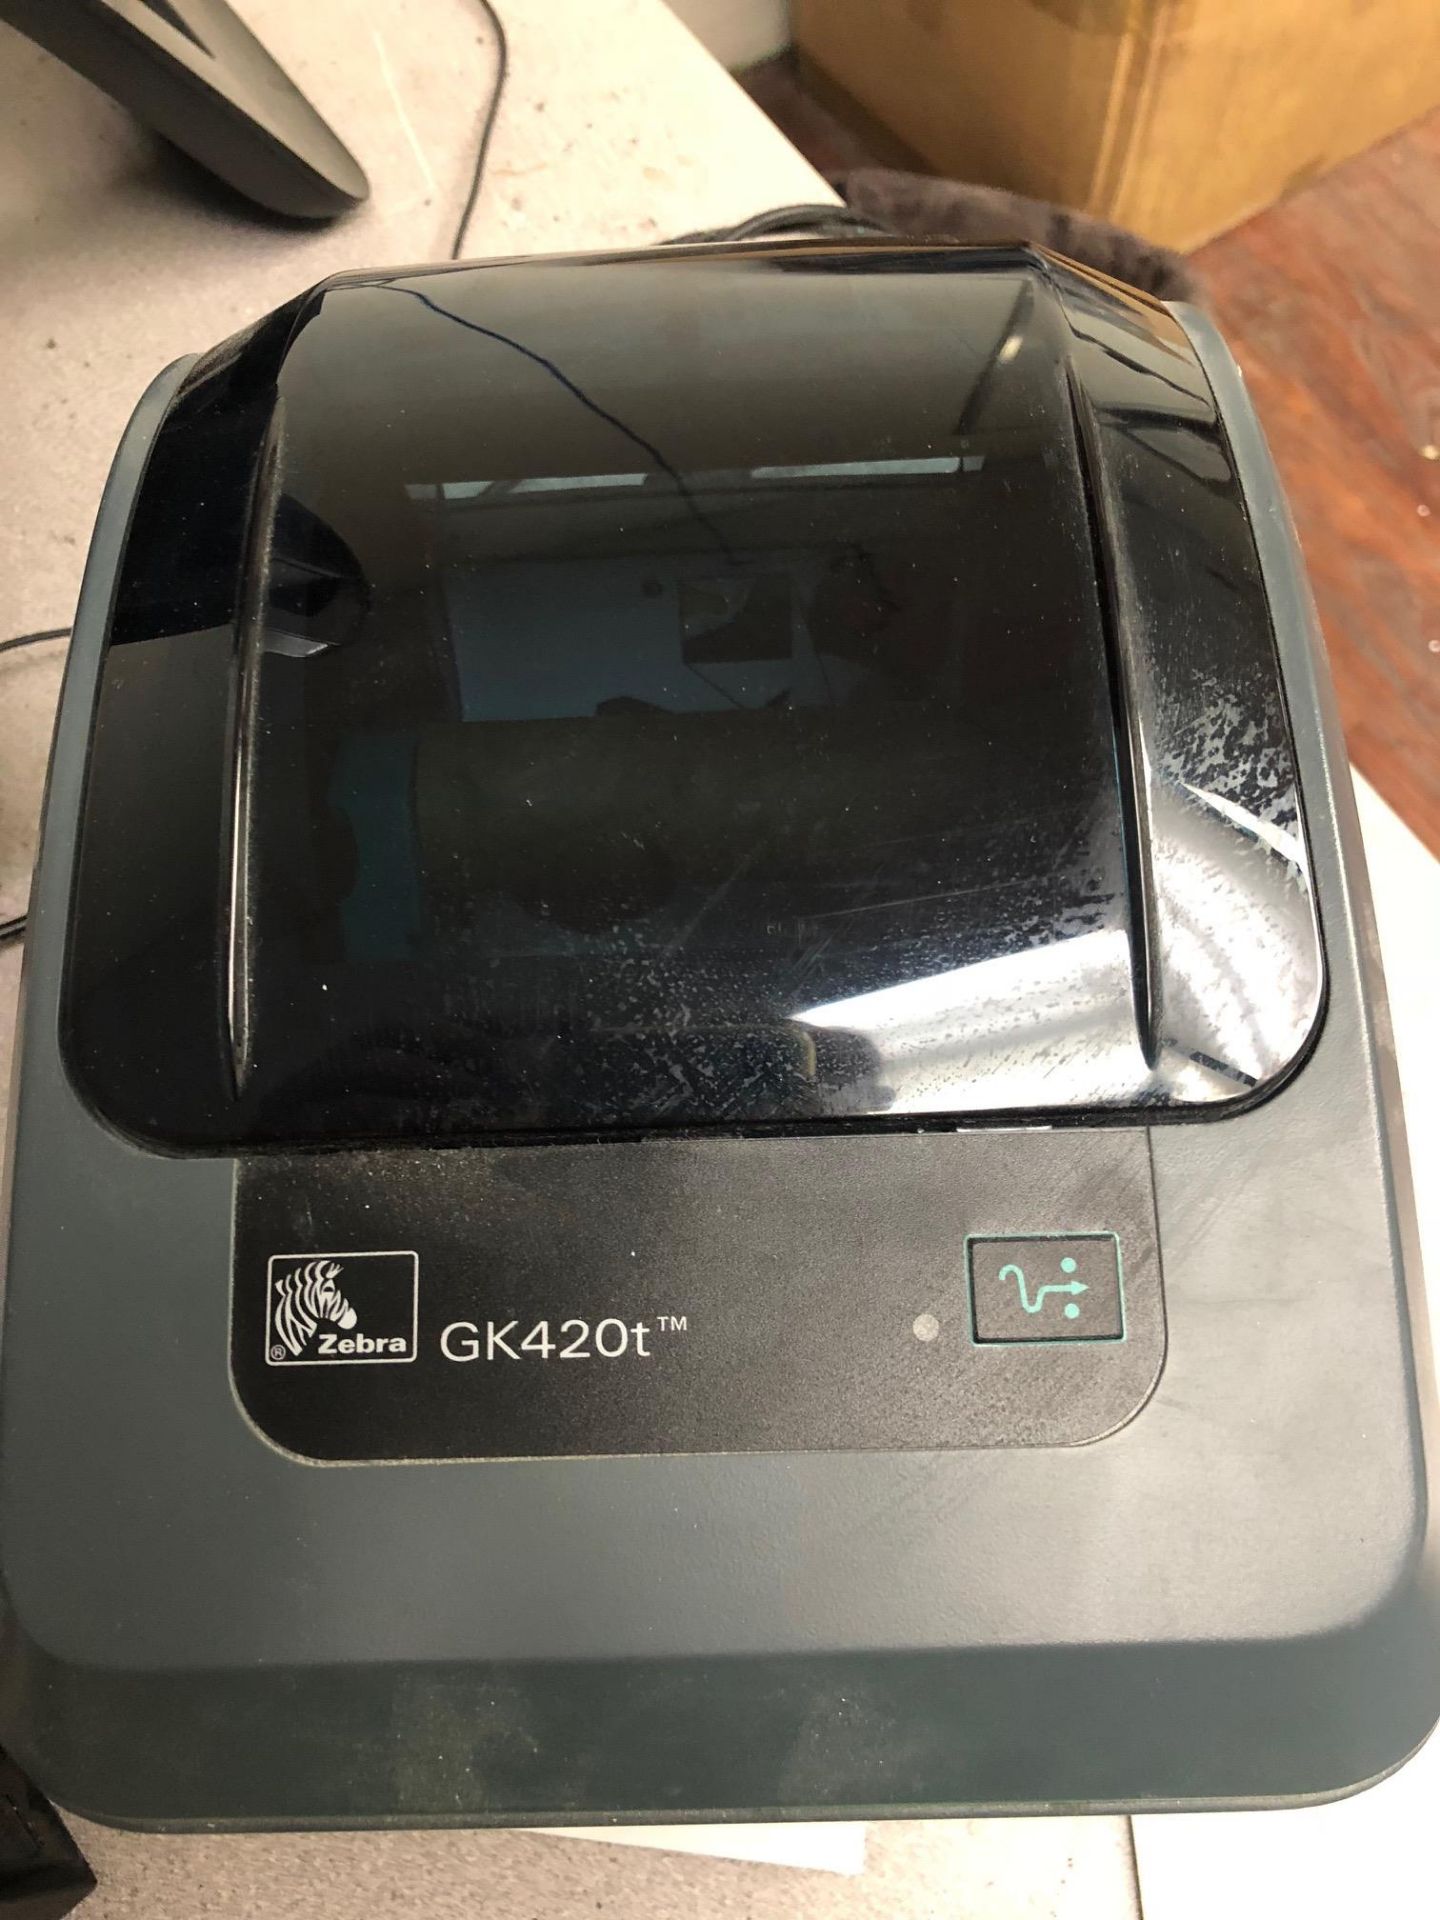 2018 zebra printer model GK420t - Image 5 of 5